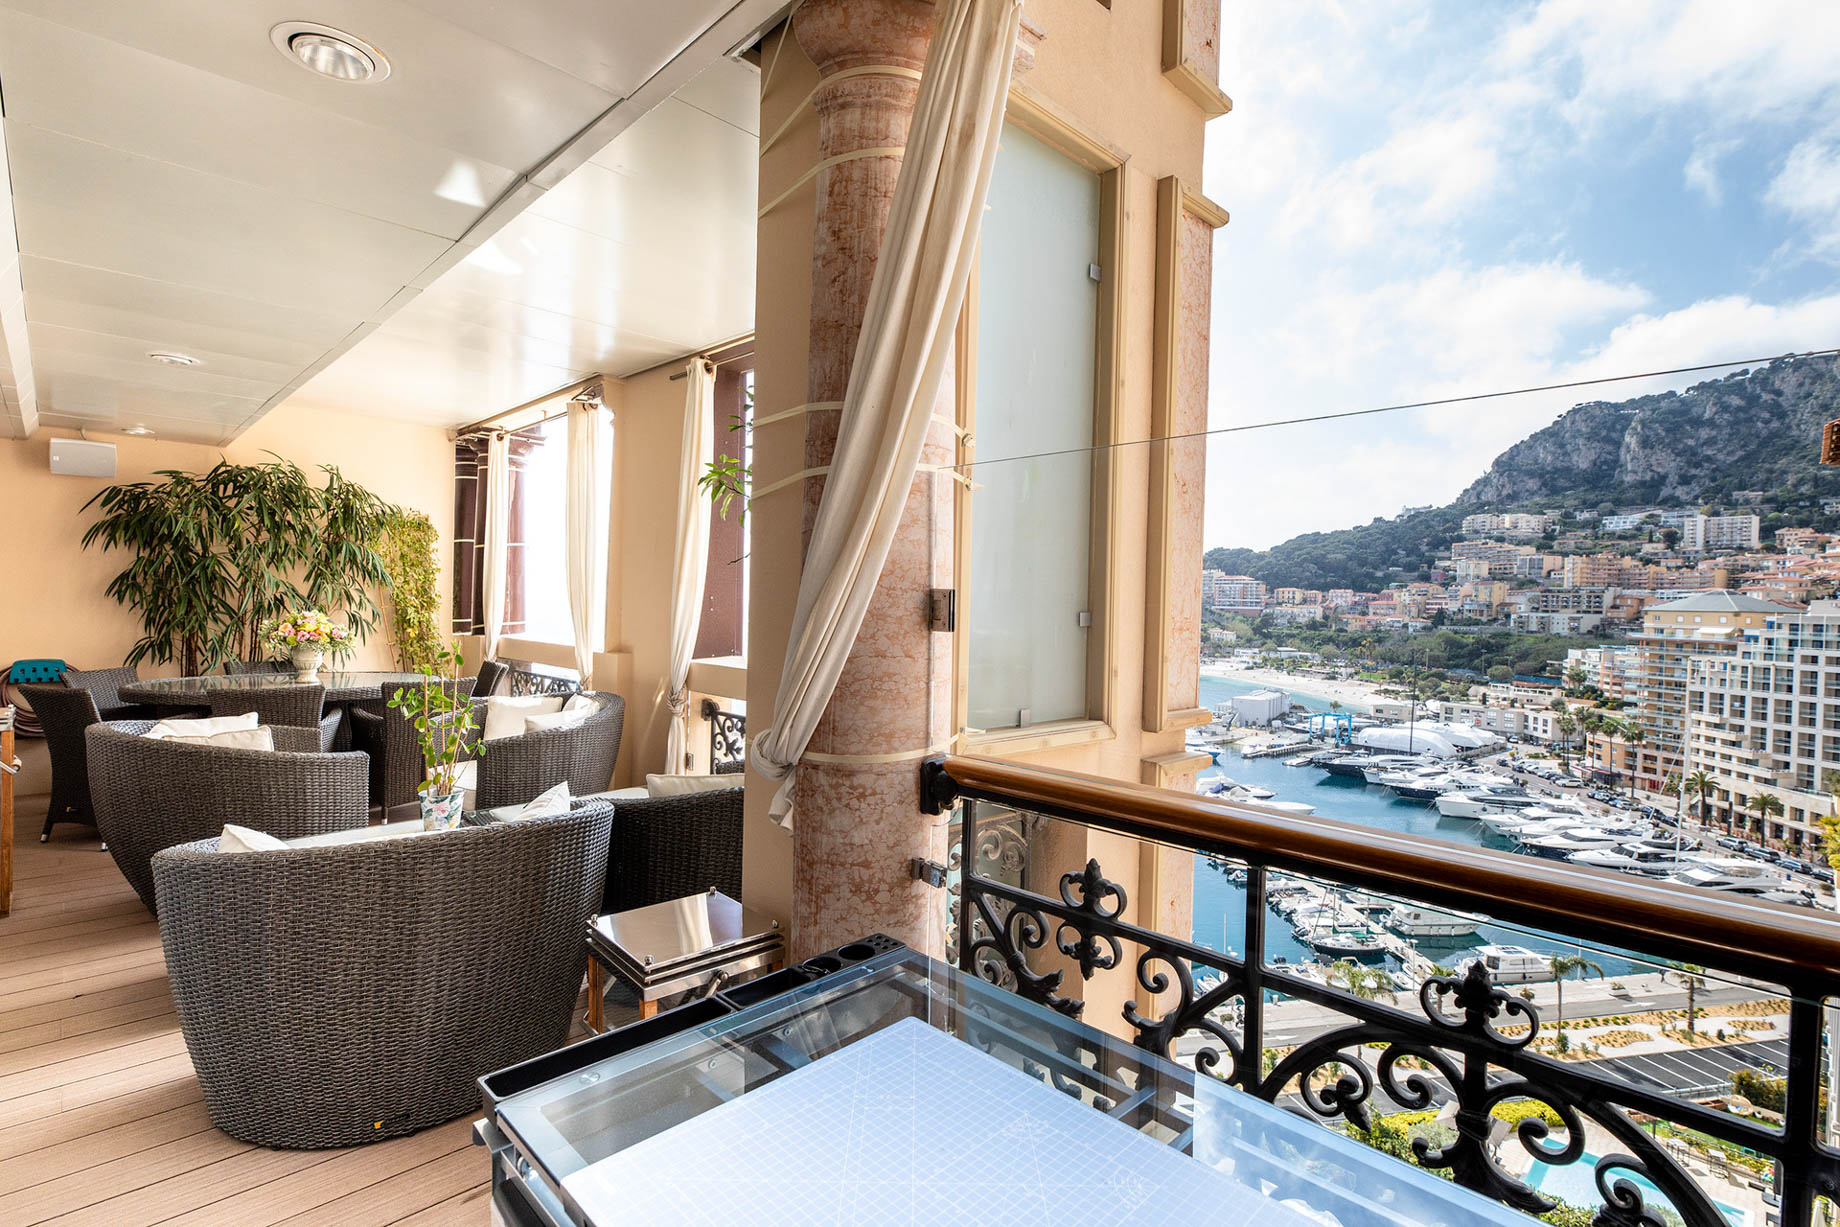 Seaside Plaza Monaco Luxury Apartment For Sale in Fontvieille, Principality of Monaco